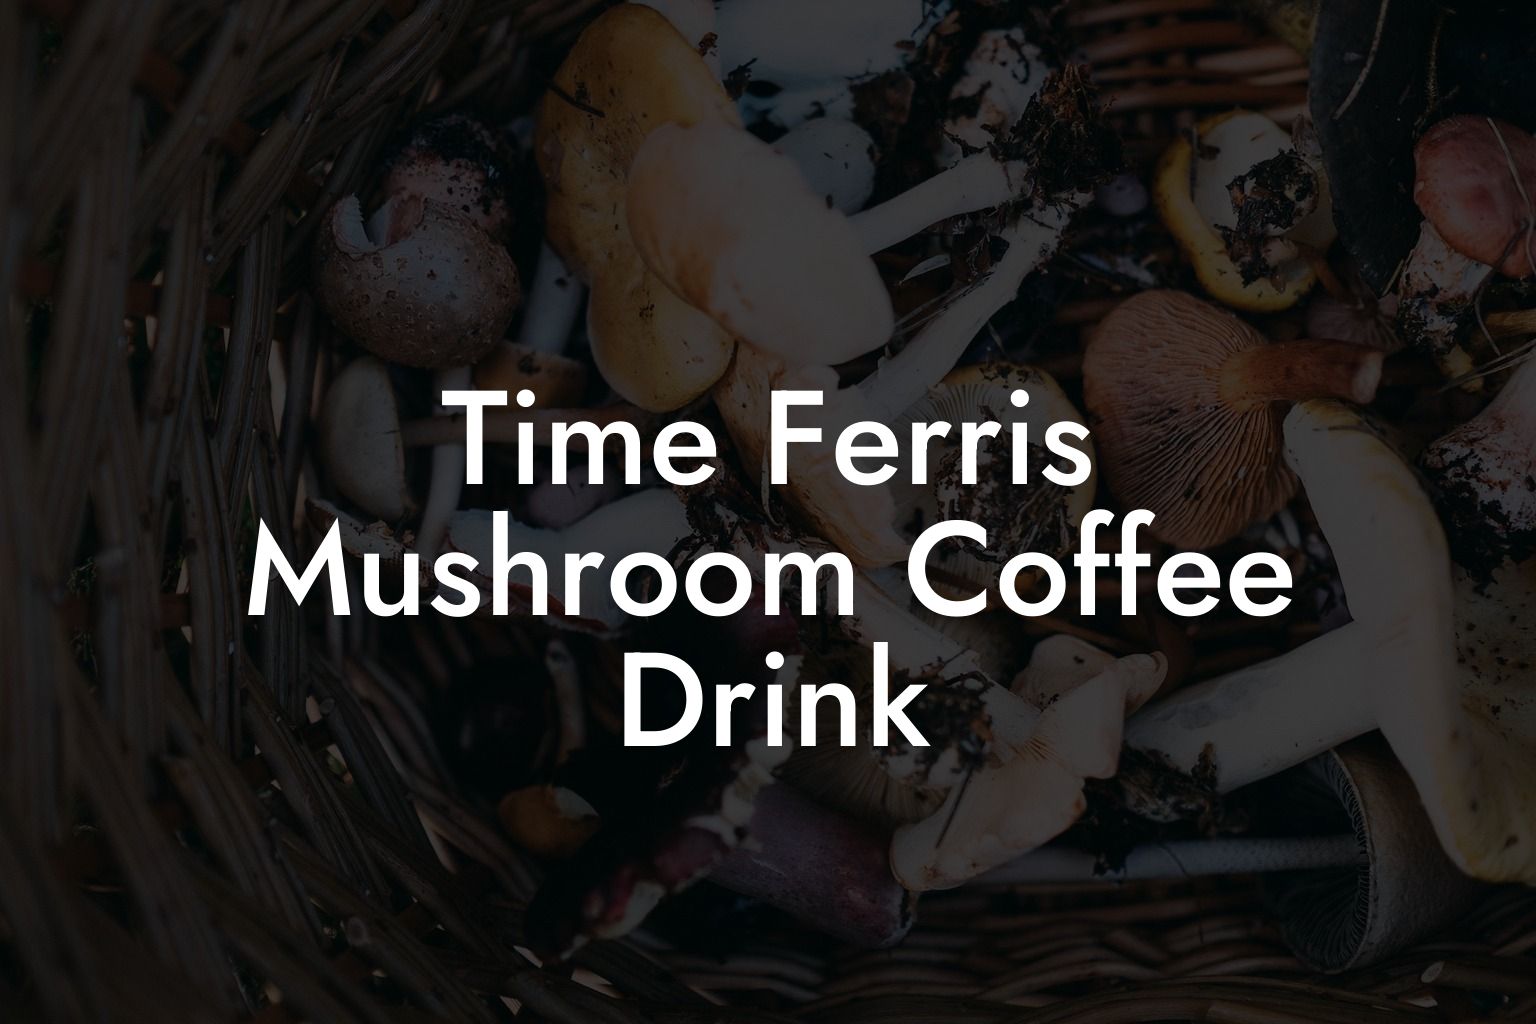 Time Ferris Mushroom Coffee Drink